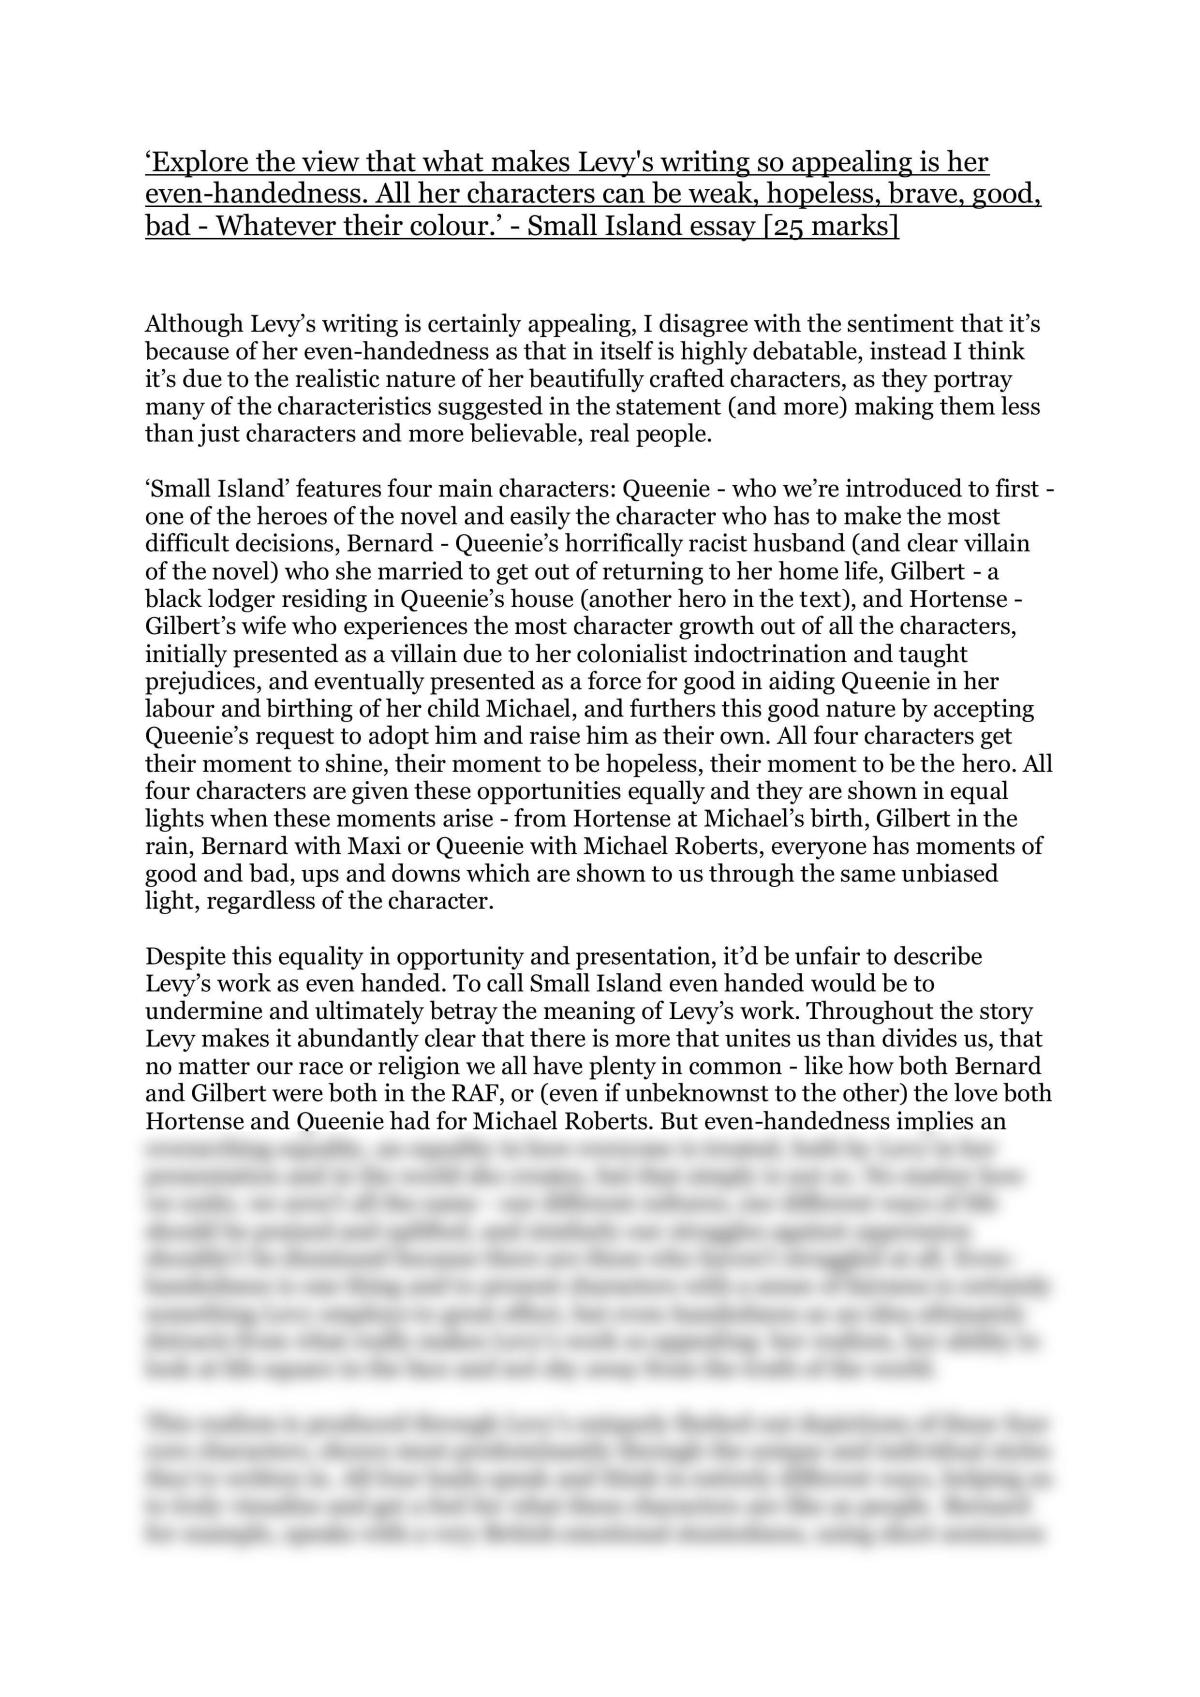 Small Island - Evenhandedness Essay - Page 1